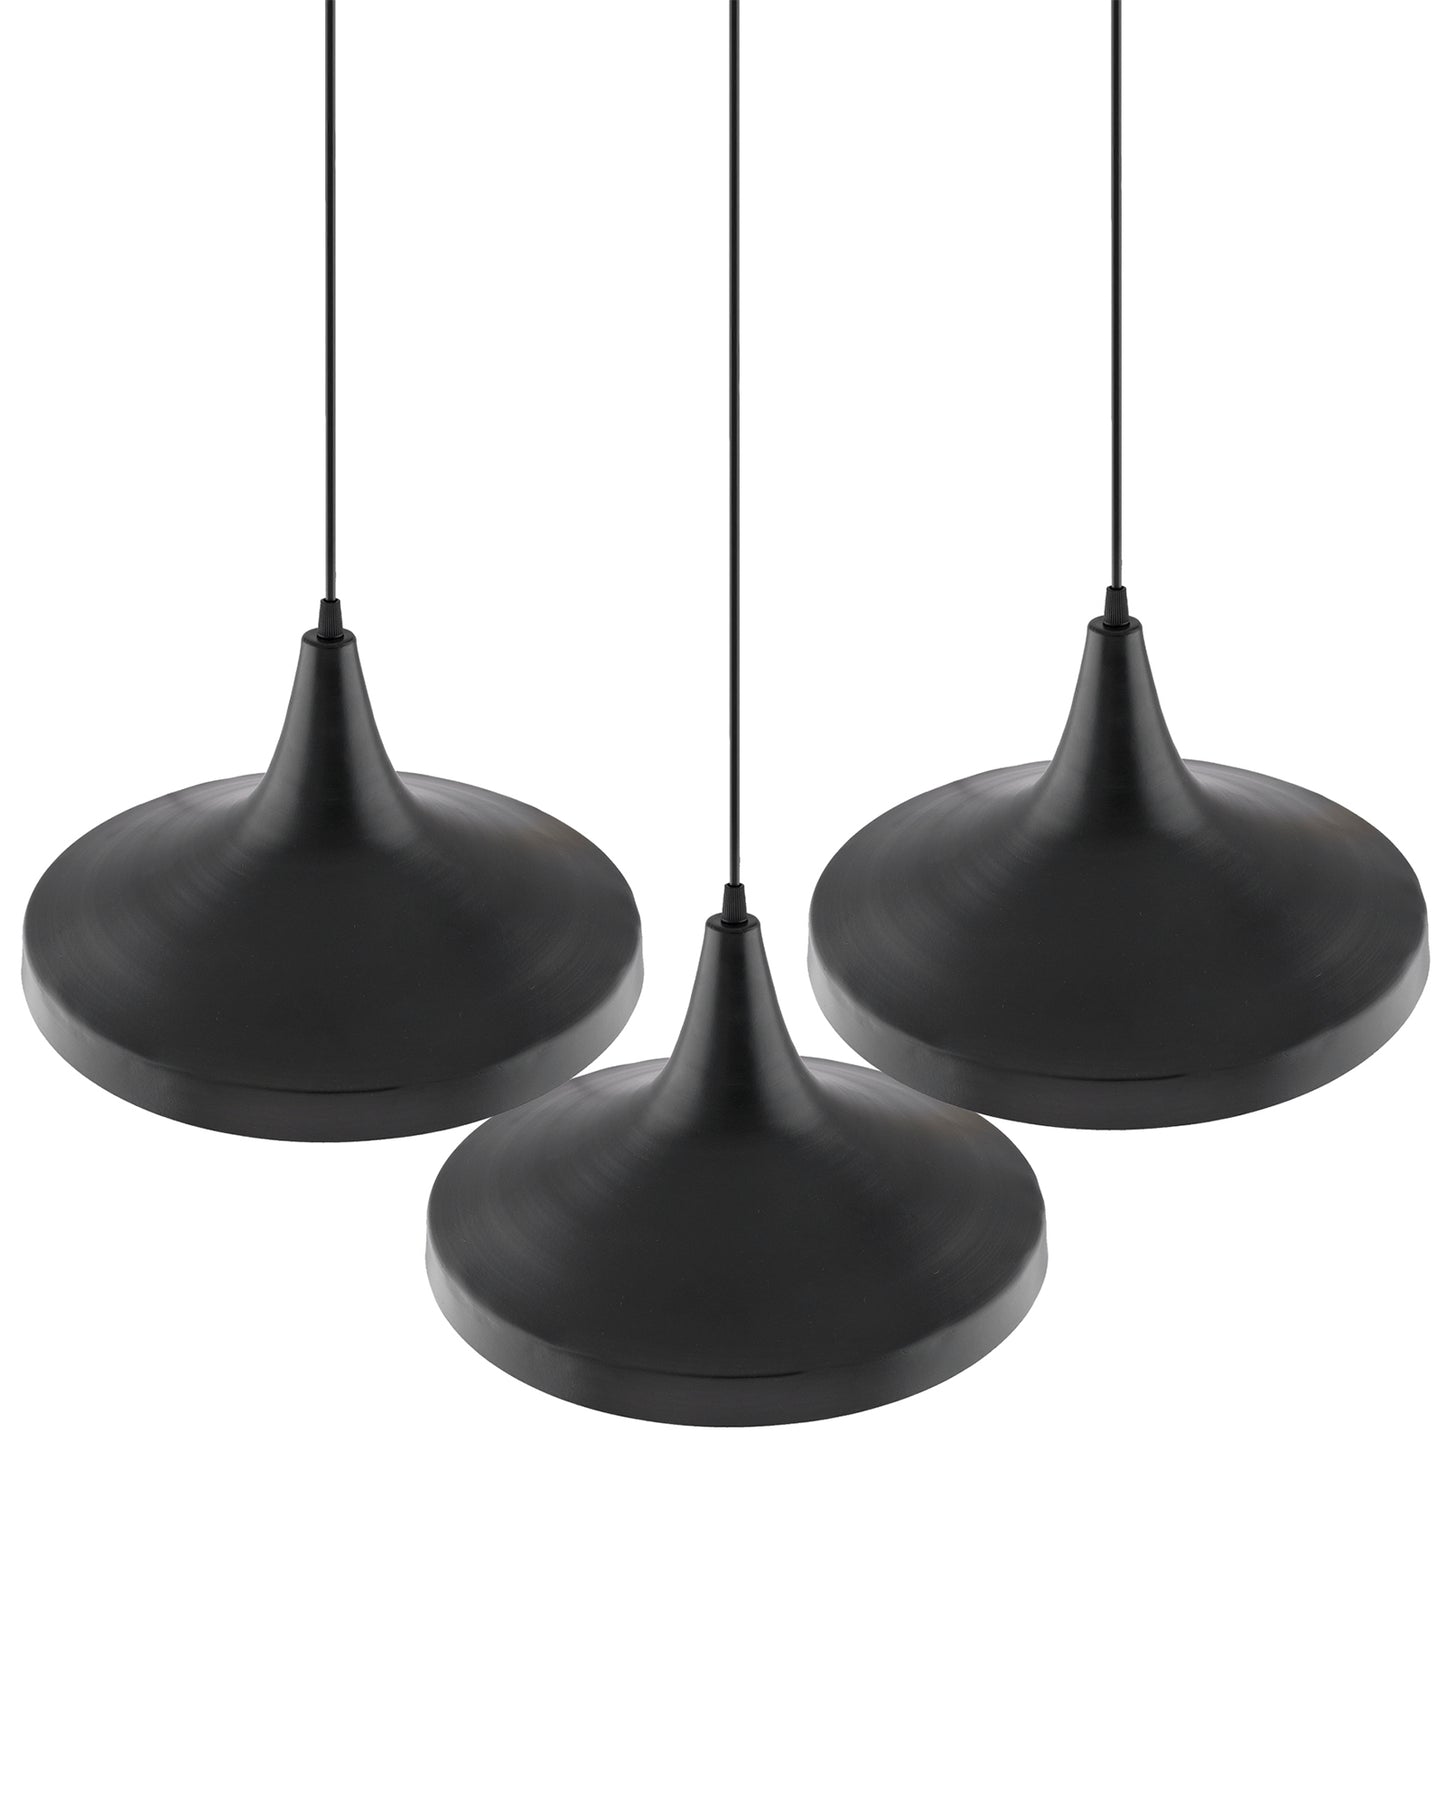 3-Lights Linear Cluster Chandelier Modern Danish hanging Light, E27 Holder, Decorative, URBAN Retro, Nordic Style